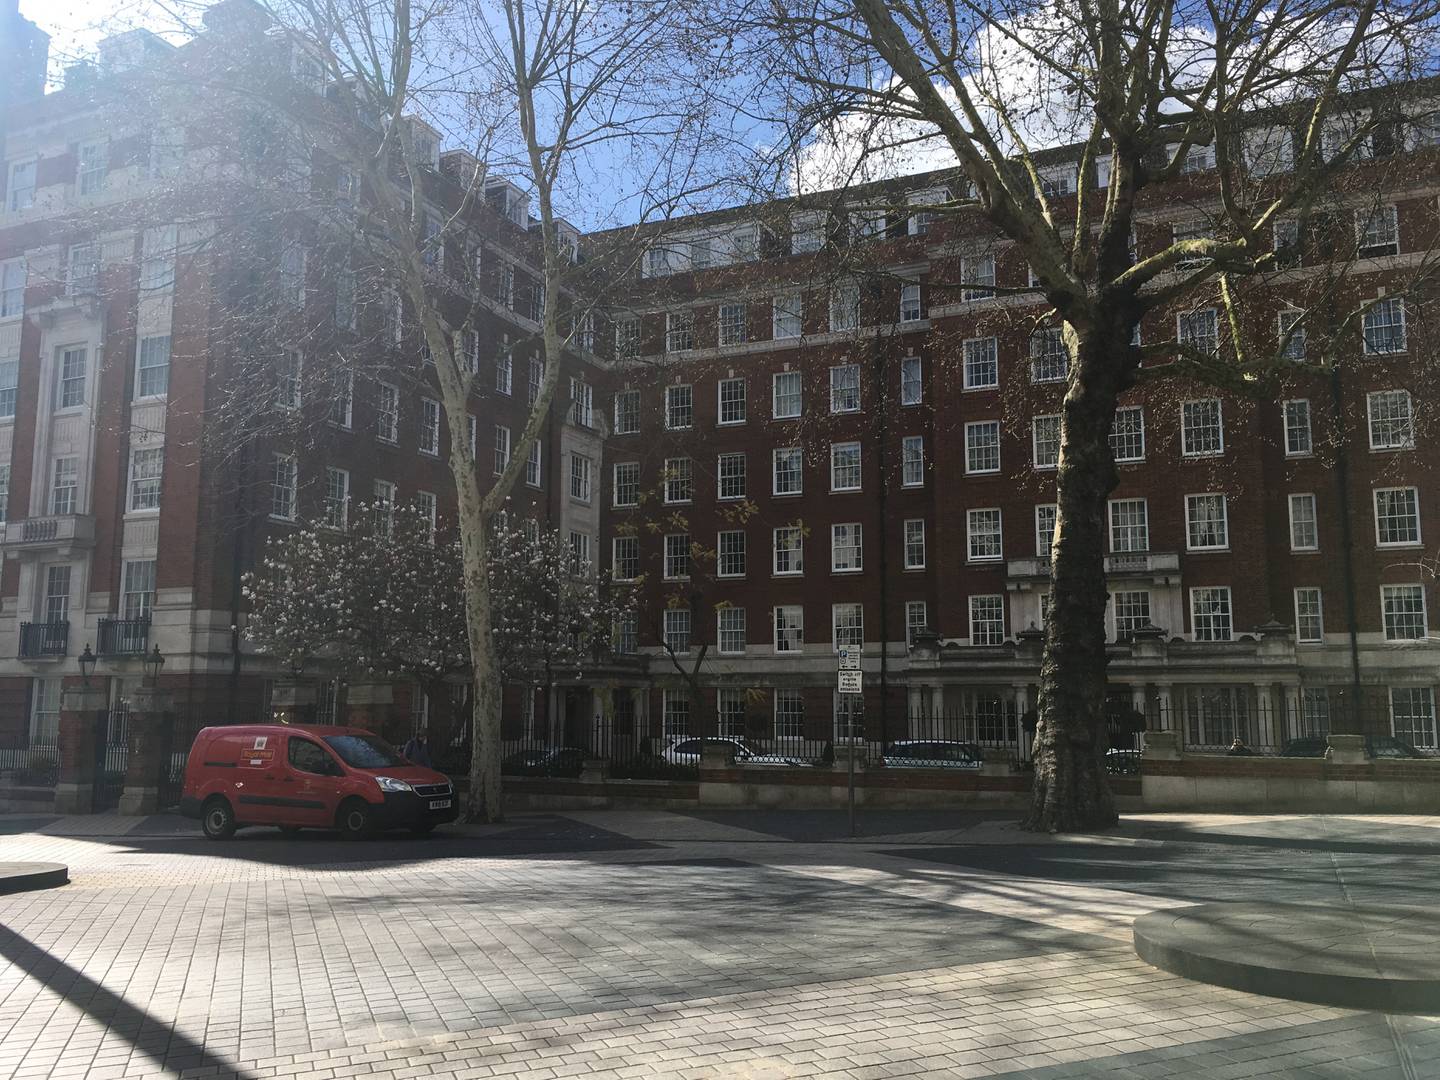 Princess Gate court apartments in South Kensington, London, where Abraaj founder Arif Naqvi has a home. Paul Peachey / The National